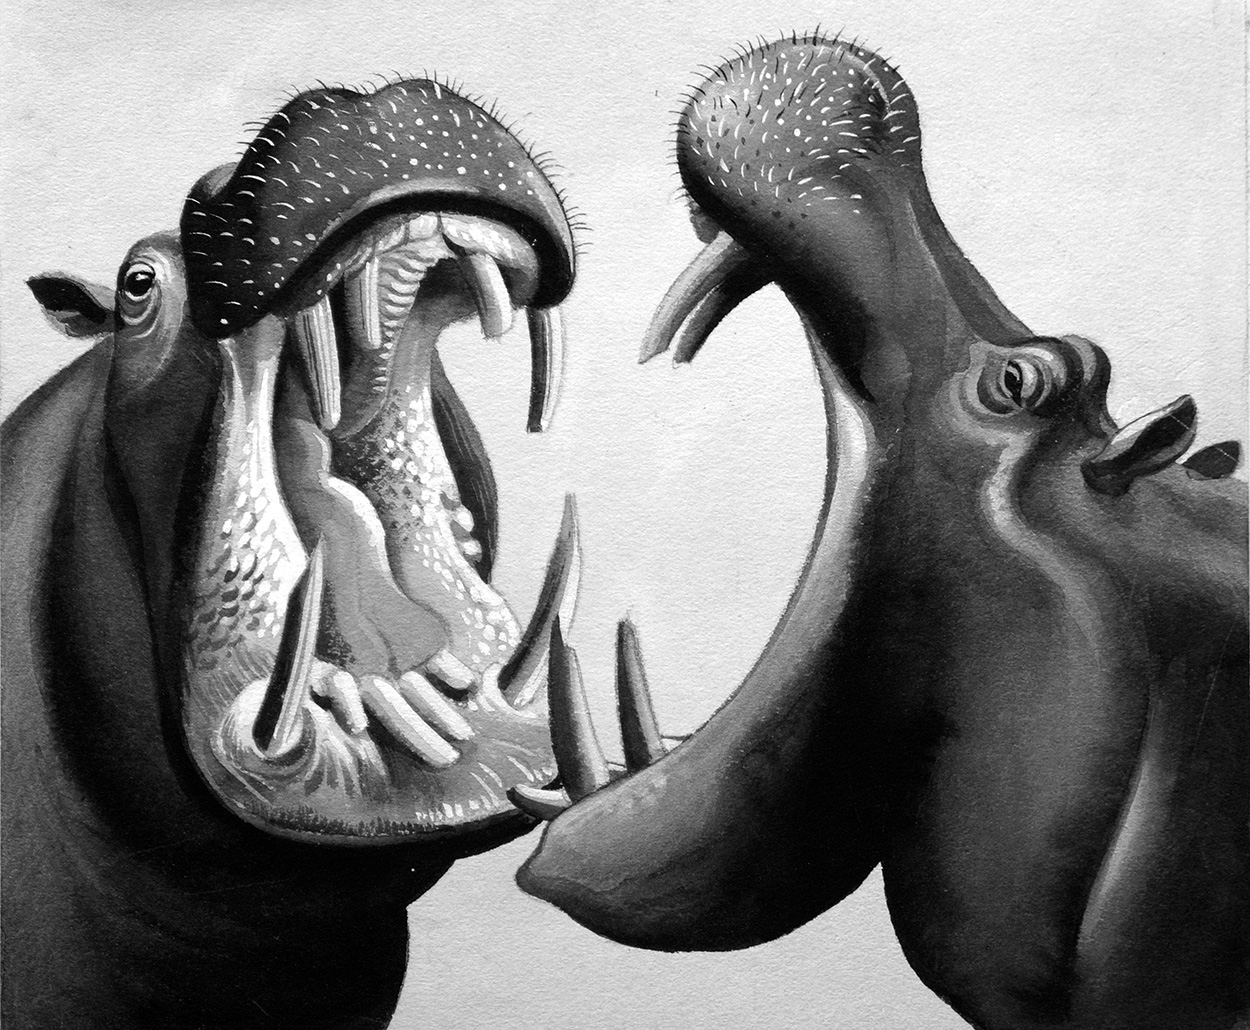 Hippo Fight (Original) art by John Keay at The Illustration Art Gallery